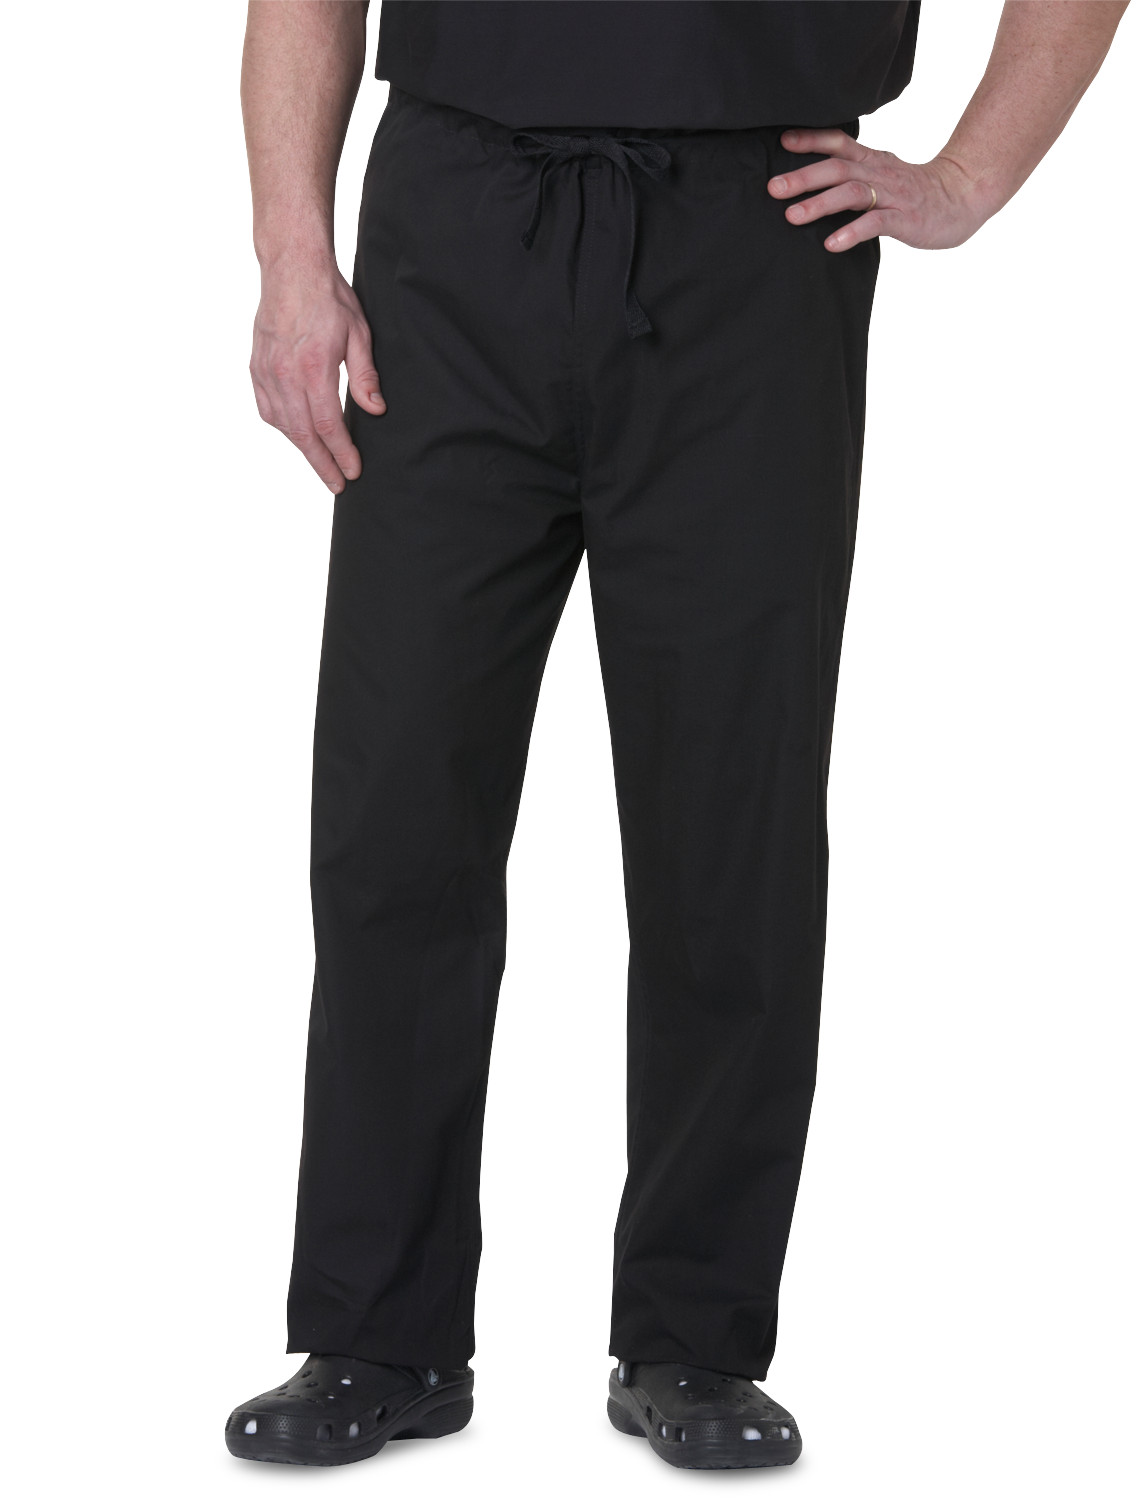 Landau Reversible Scrub Pants Casual Male XL Big & Tall | eBay